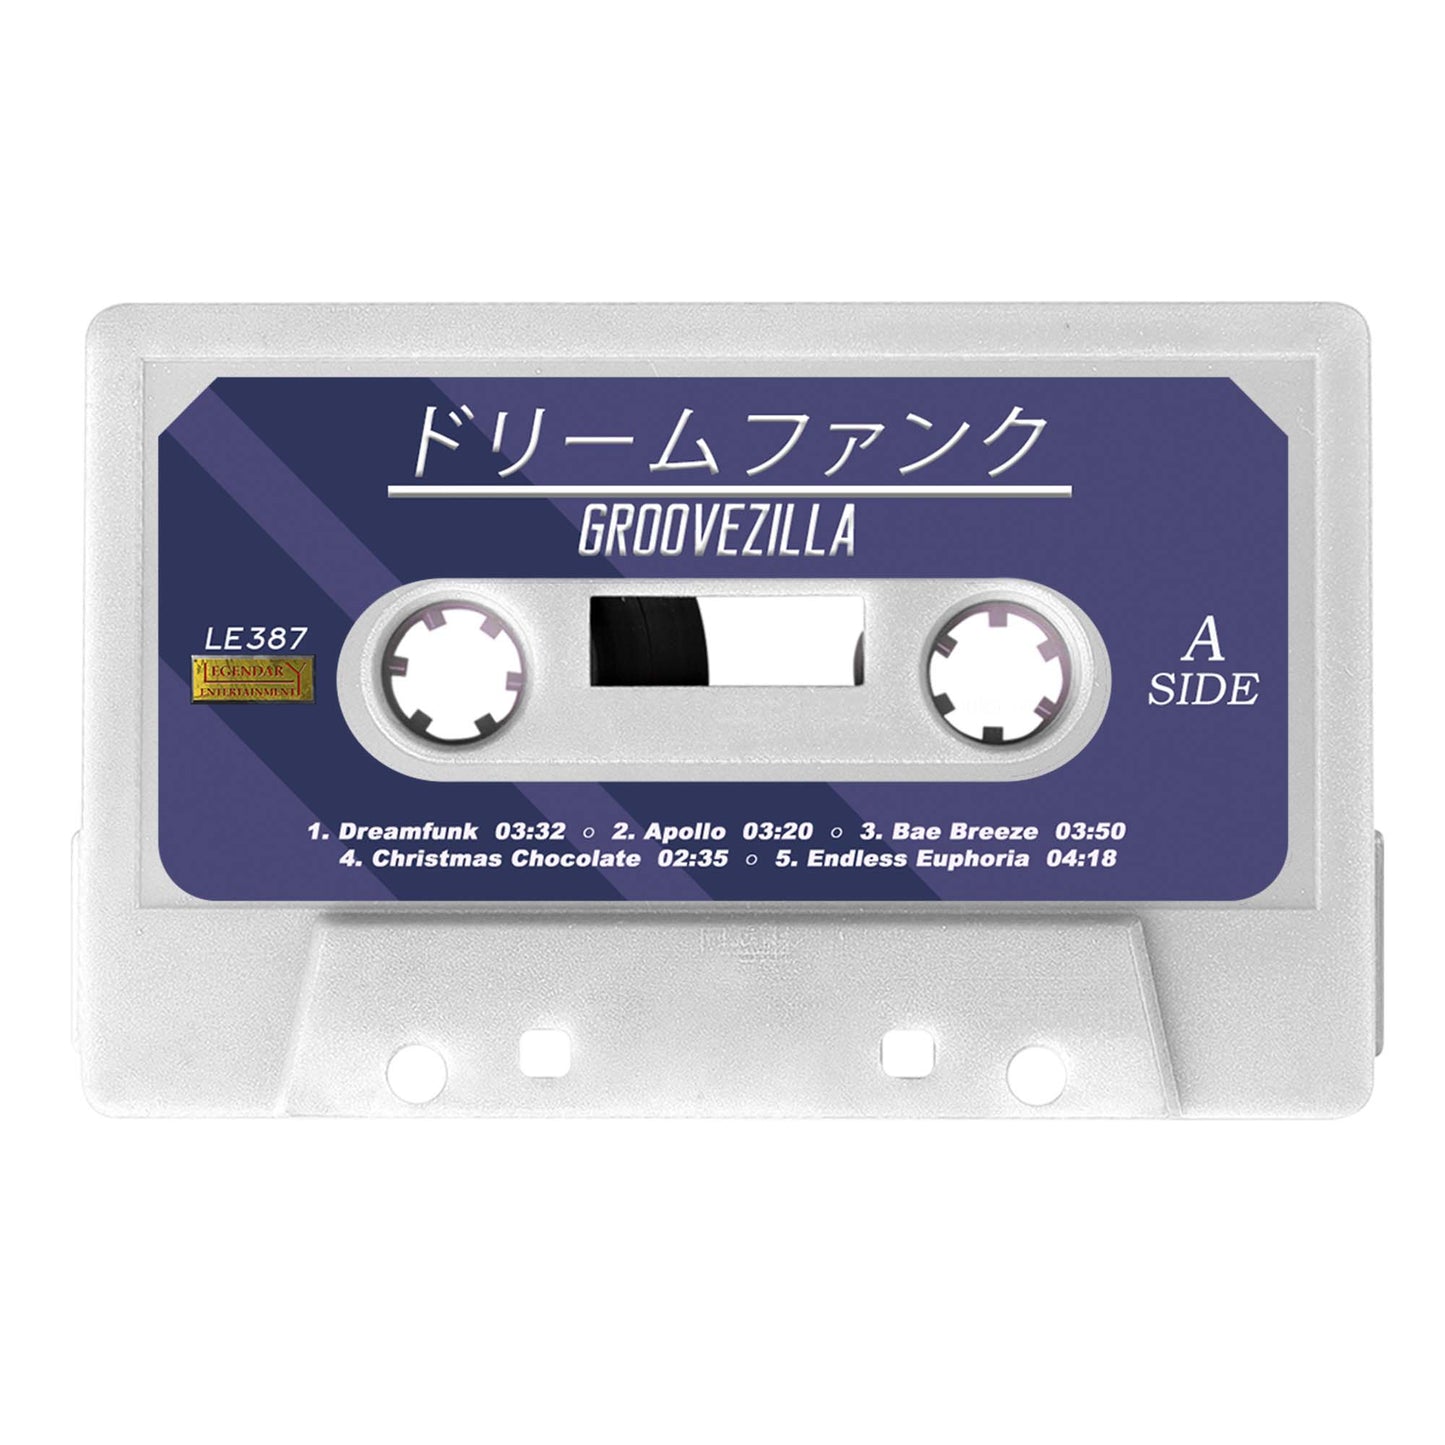 Groovezilla - "Dreamfunk" Limited Edition Cassette Tape